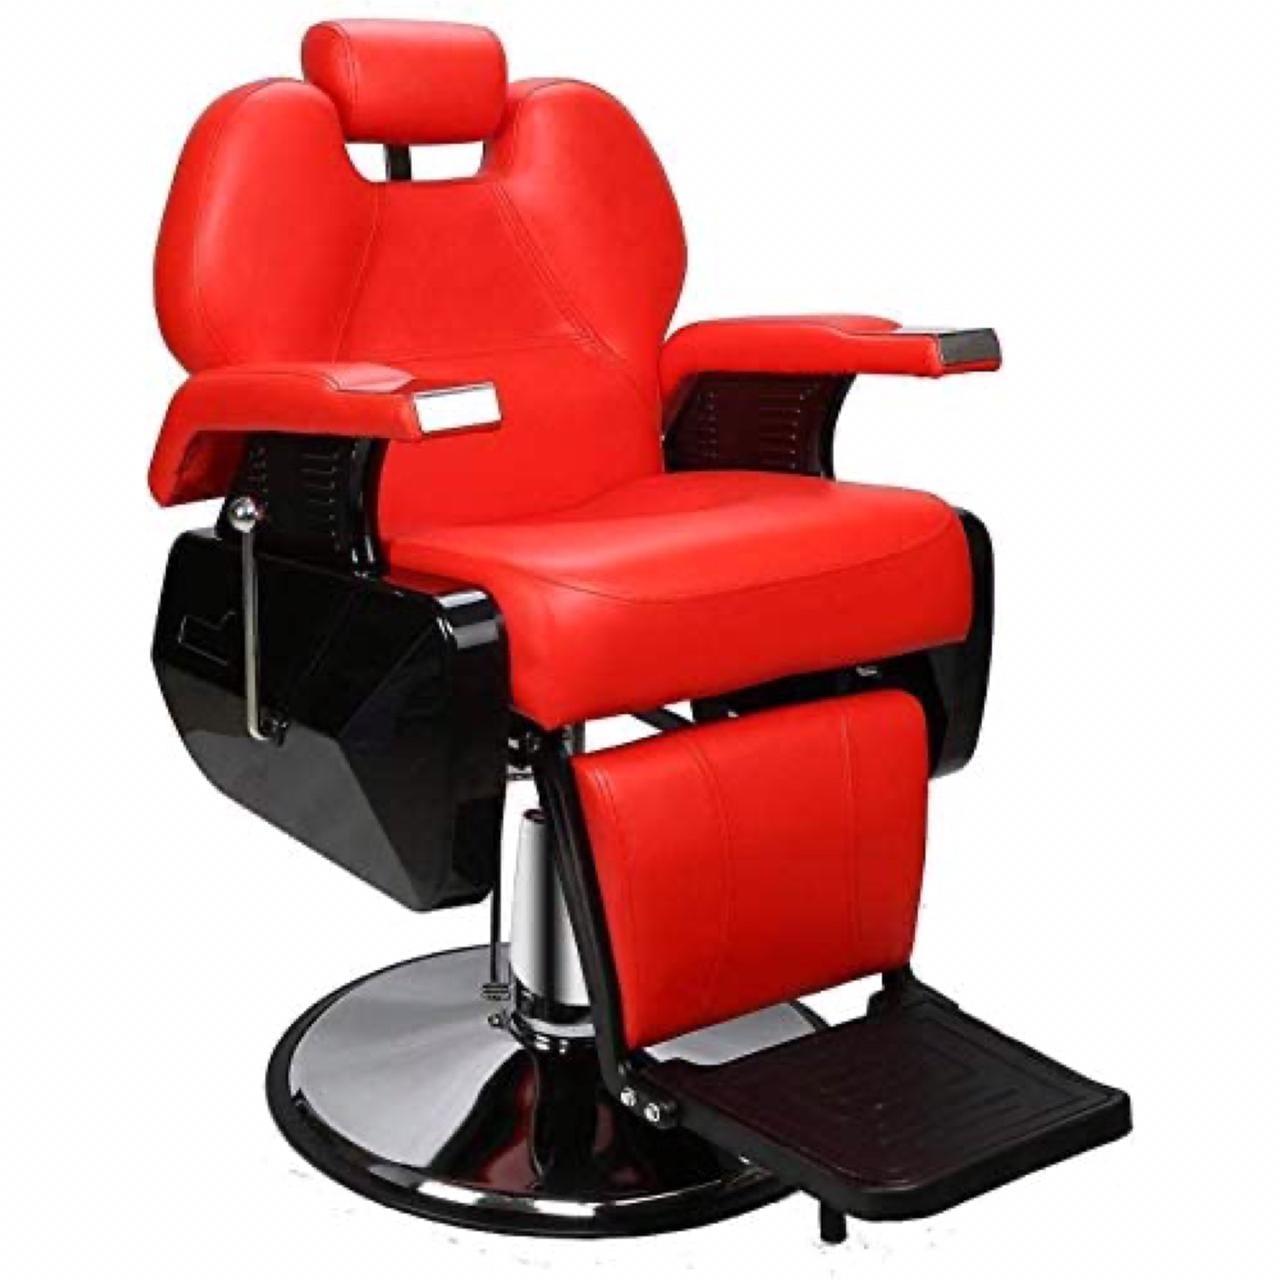 Globalstar Professional Red Barber Chair 2687 - Awarid UAE